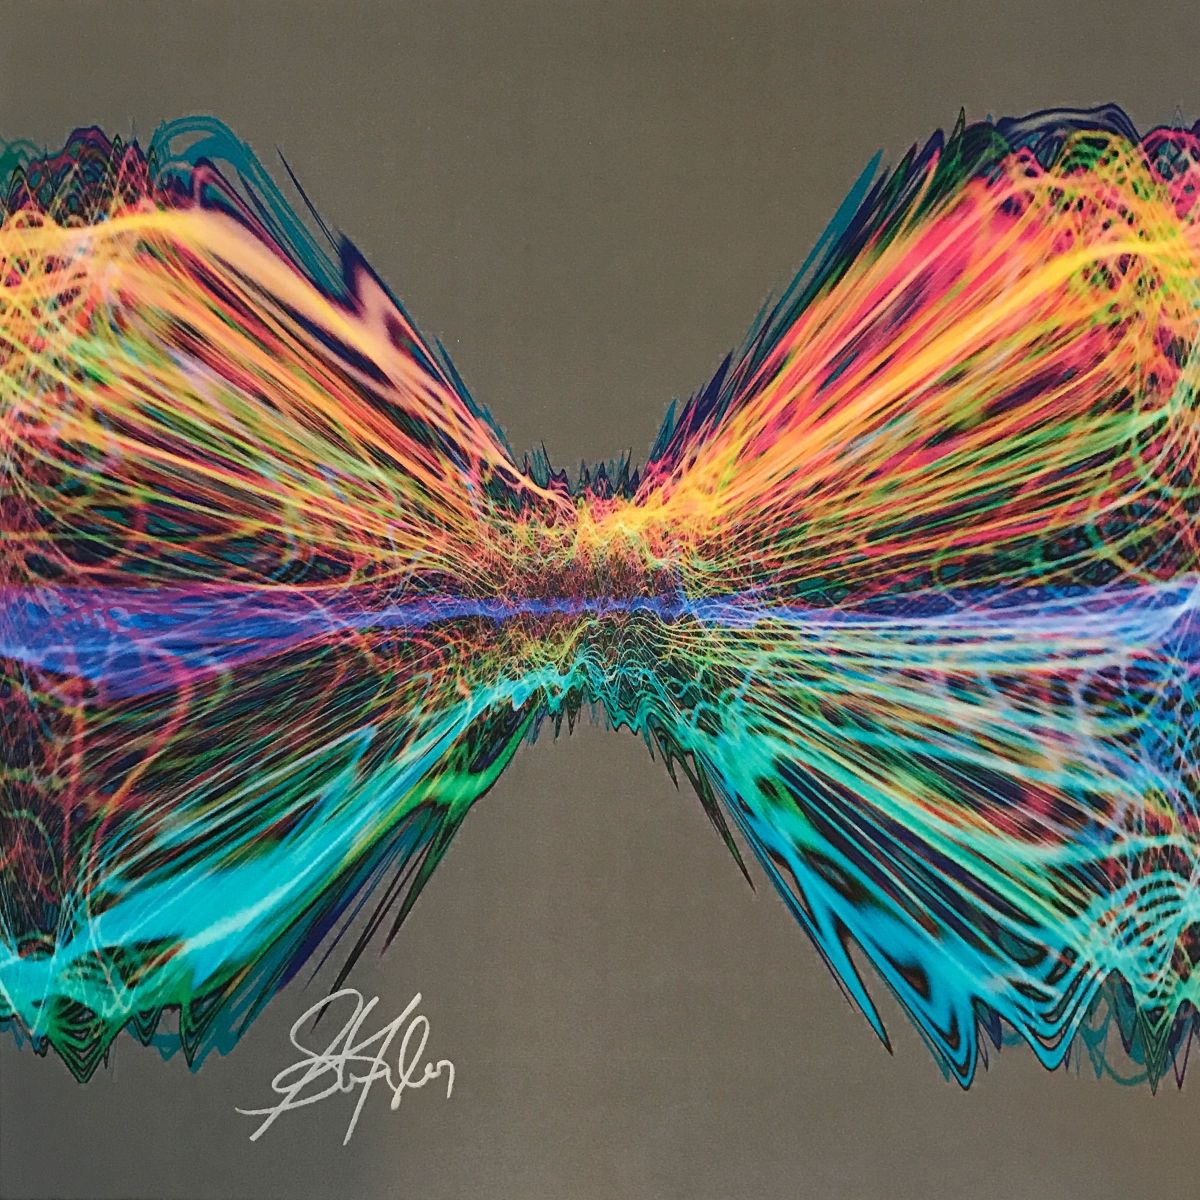 Steven Tyler signs Soundwaves Art Foundation limited editon artwork to benefit Janie's Fund.